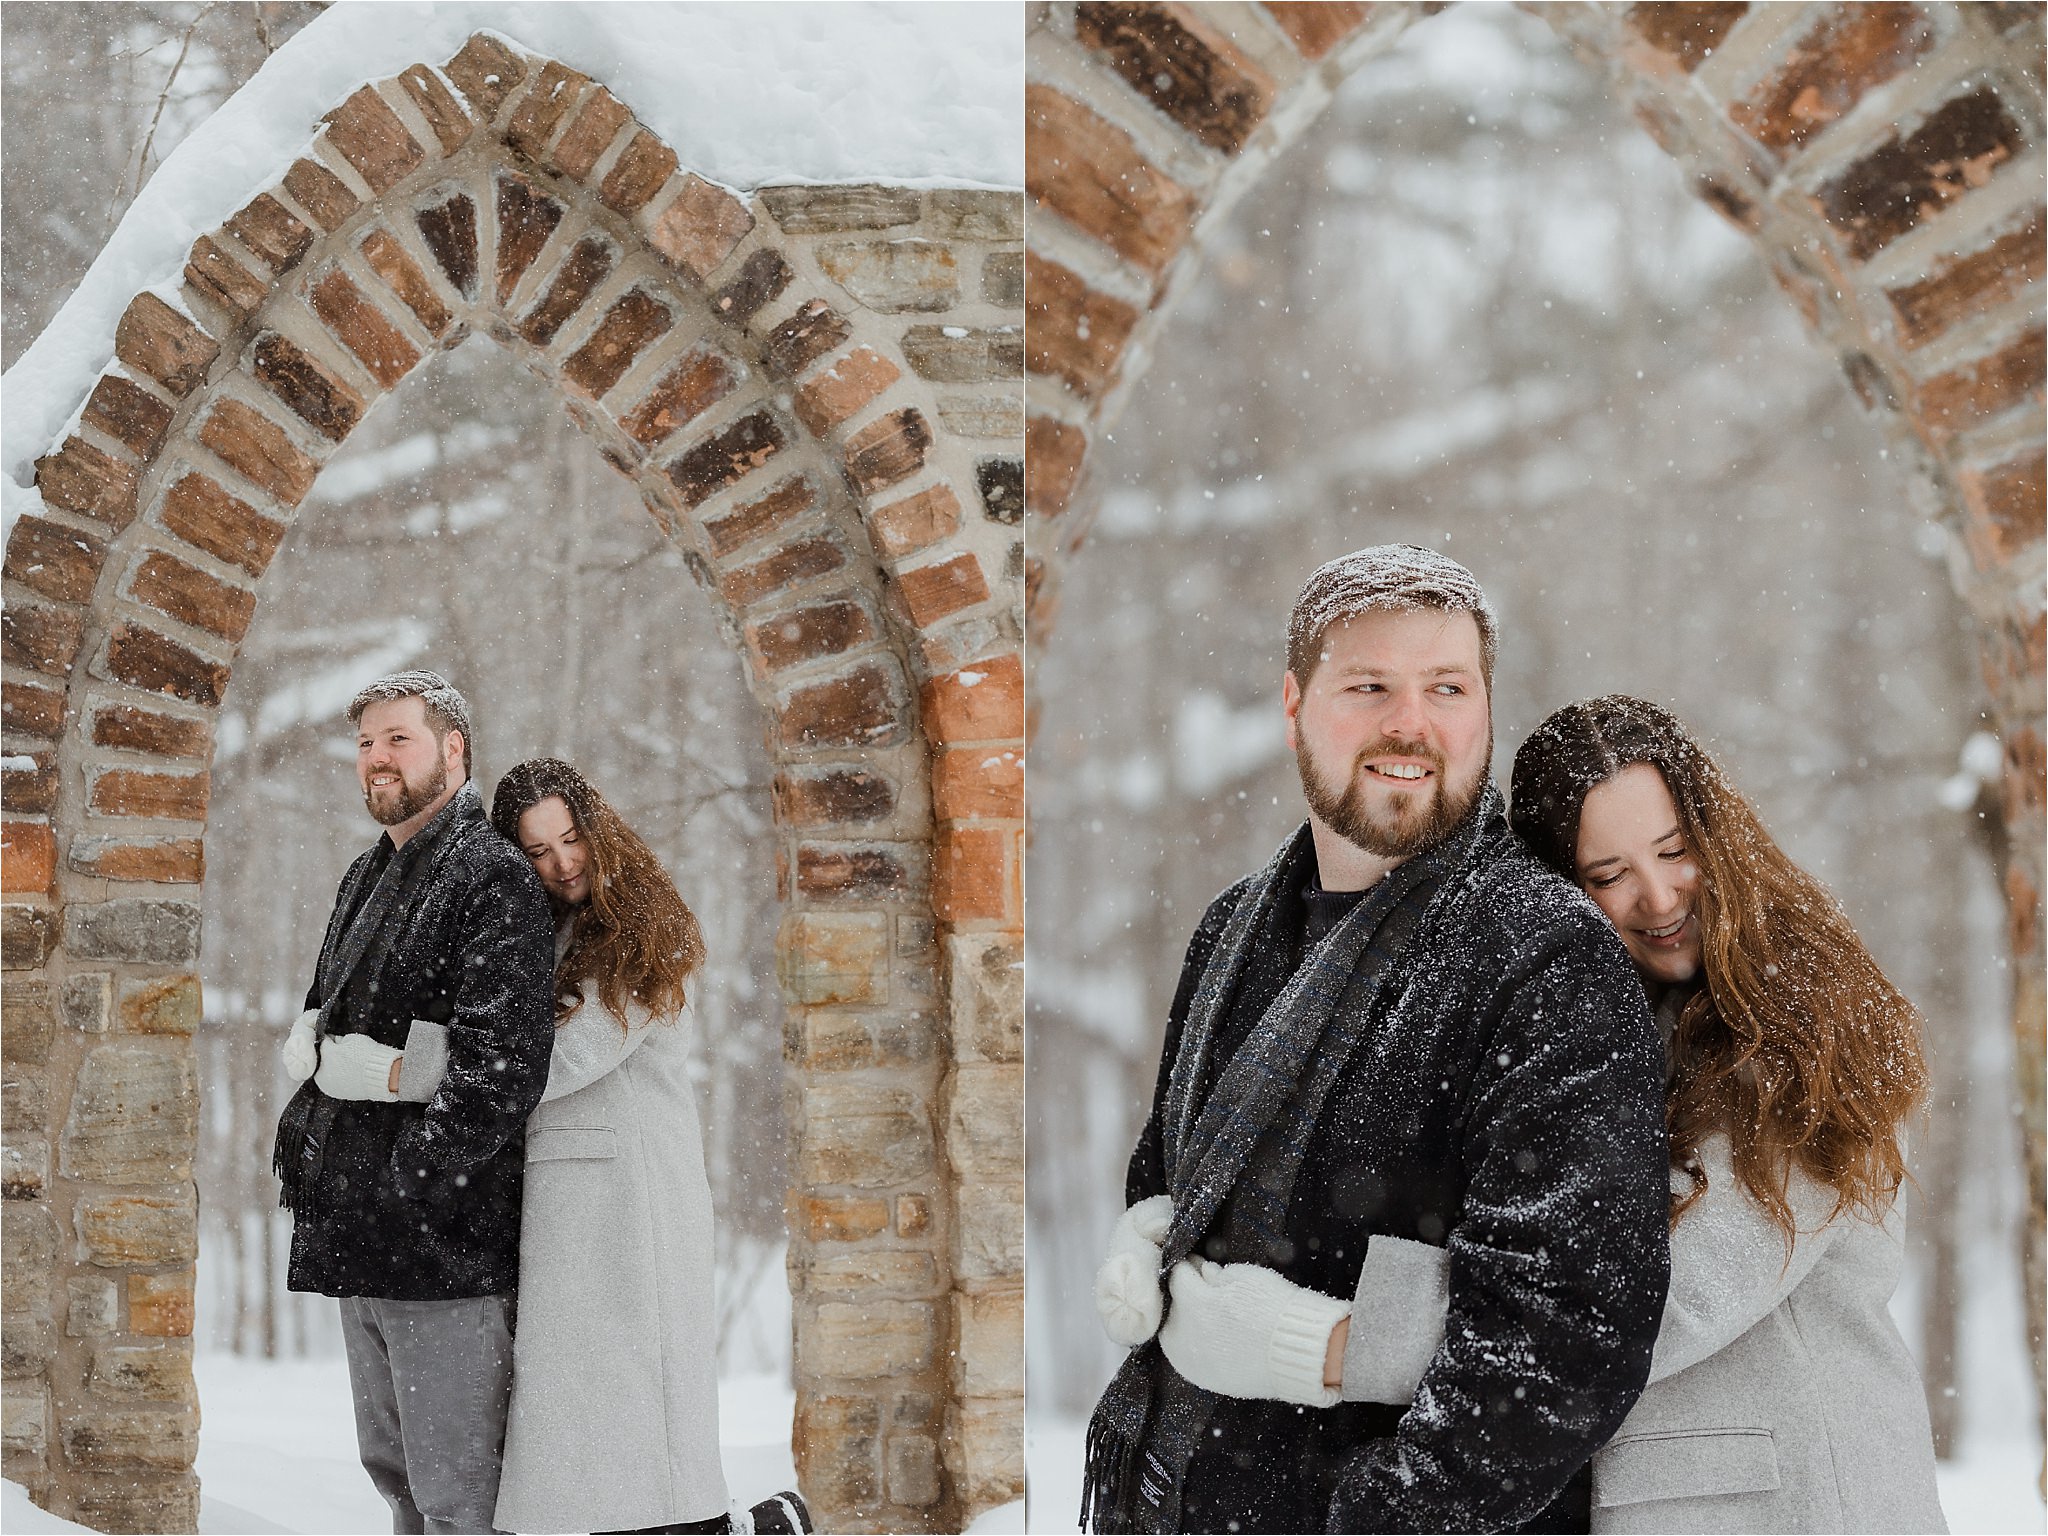 Snowy winter engagement photo shoot at McKenzie King Estates in Gatineau Park - Ottawa wedding photographer